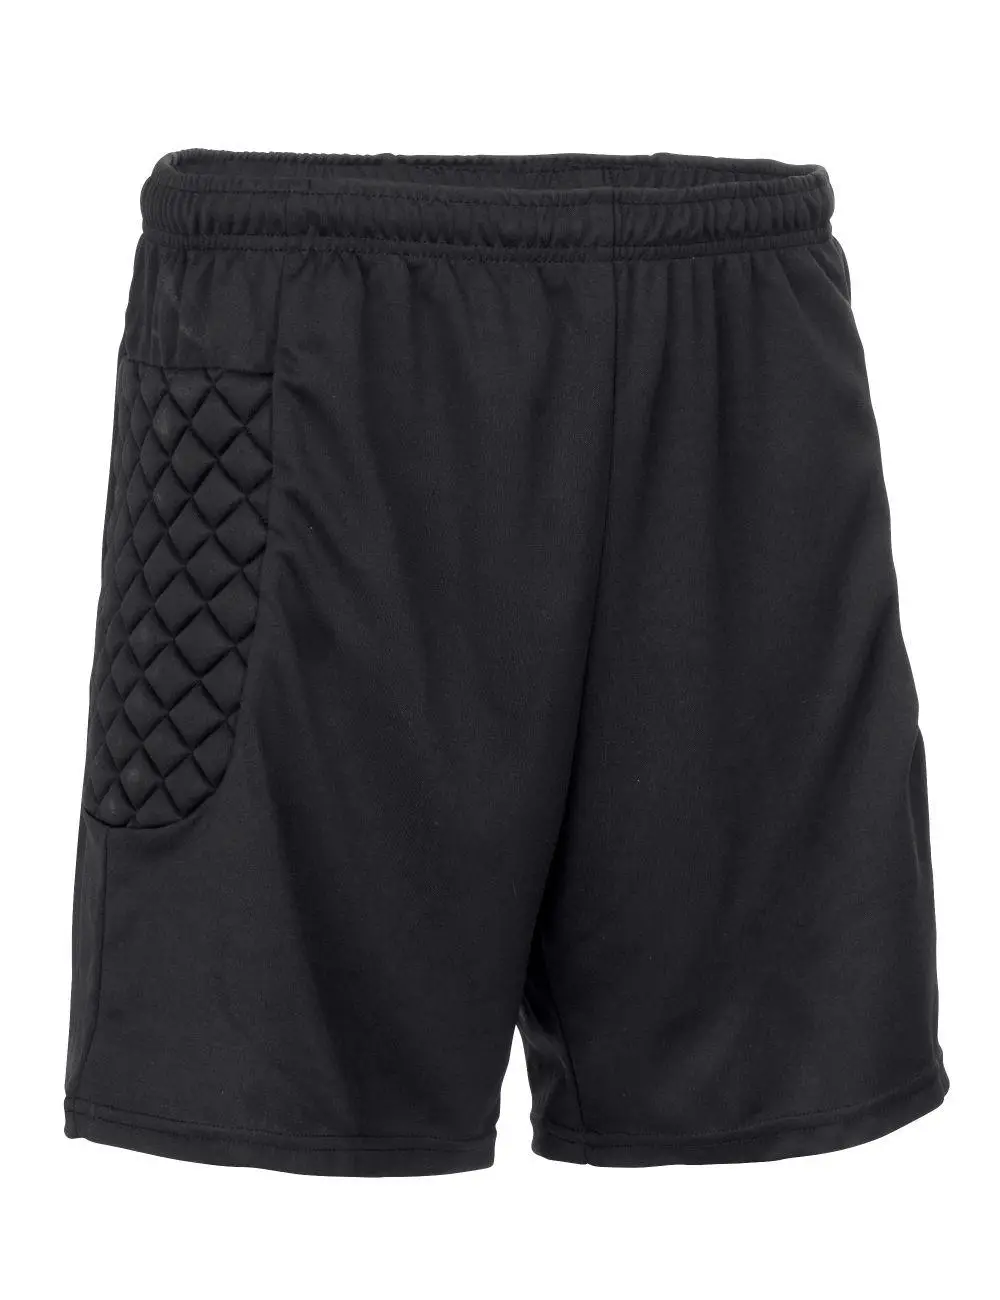 Вратарские шорты SELECT Madrid goalkeepers shorts (football)  чорний, XXL фото товара